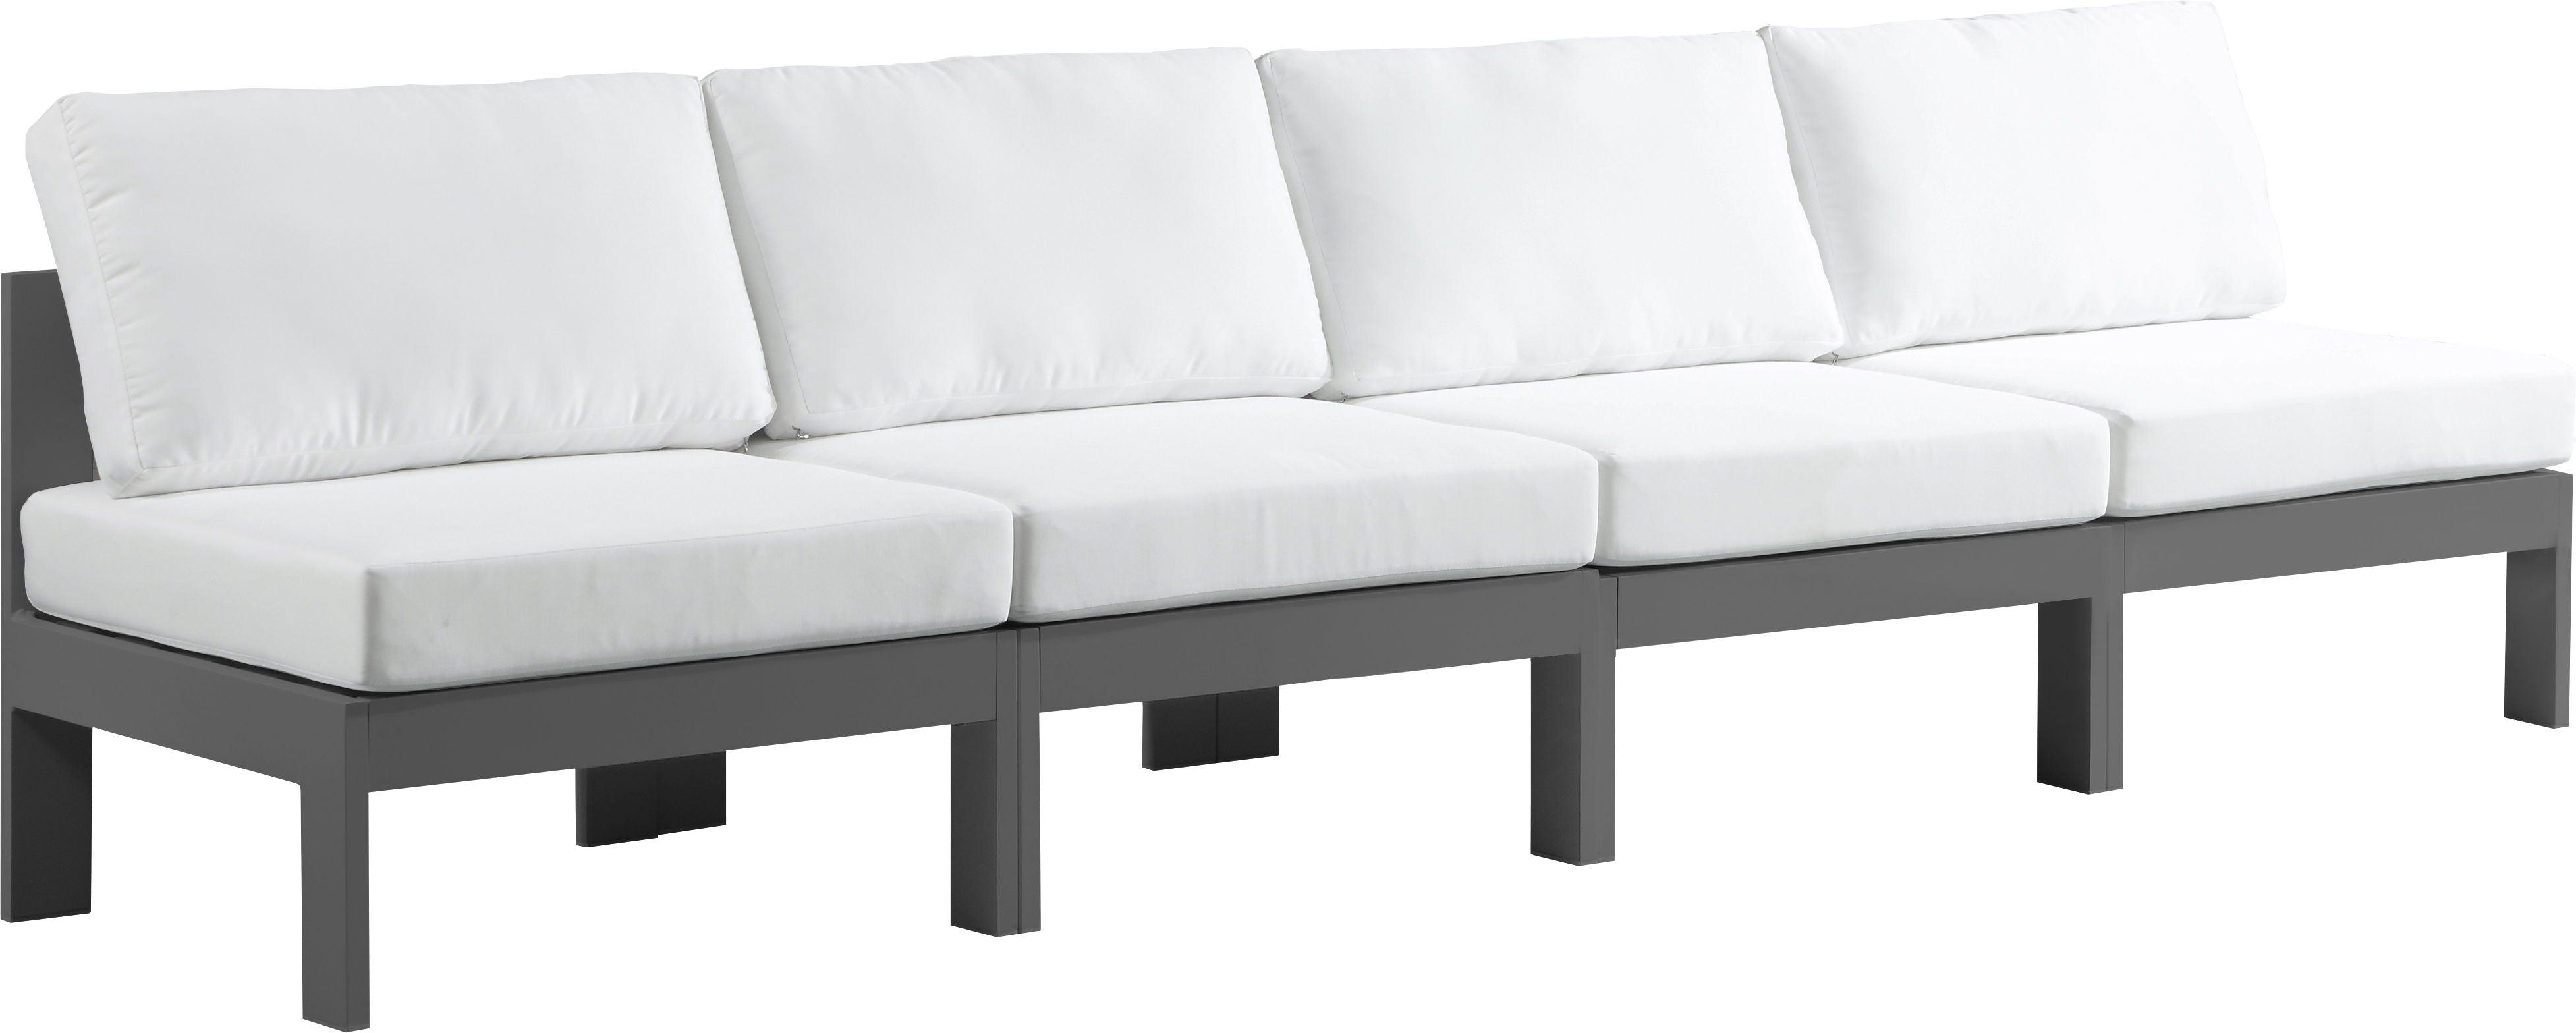 Meridian Furniture - Nizuc - Outdoor Patio Modular Sofa 4 Seats - White - Modern & Contemporary - 5th Avenue Furniture